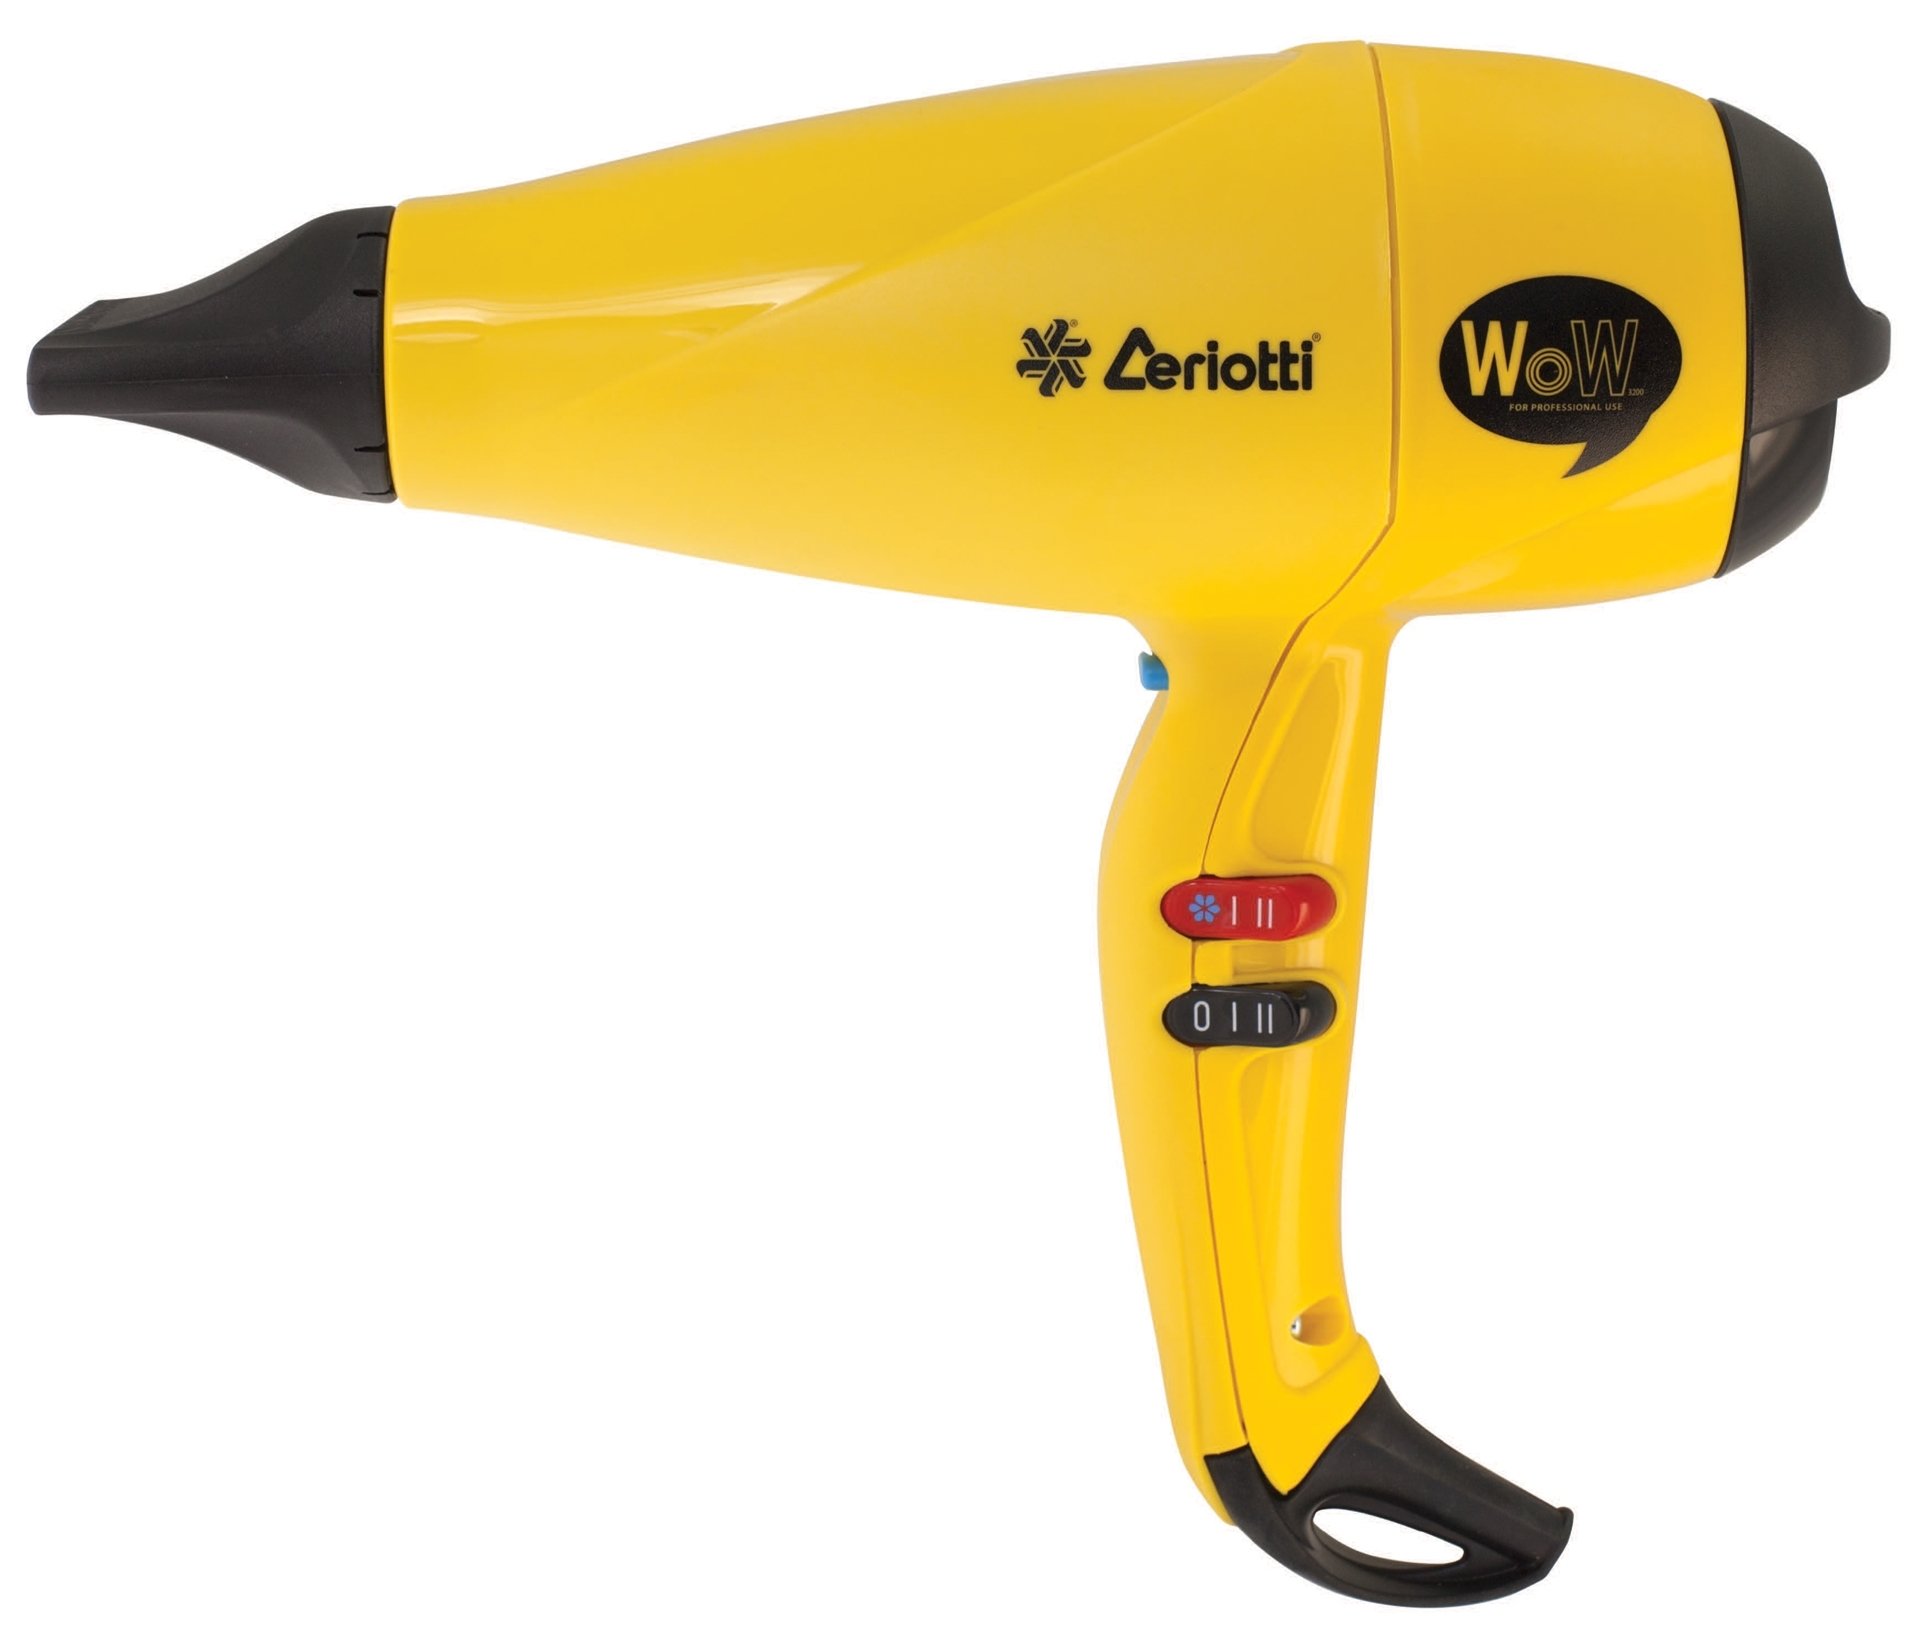 Ceriotti Hair dryer Wow Yellow - Cortex Ltd